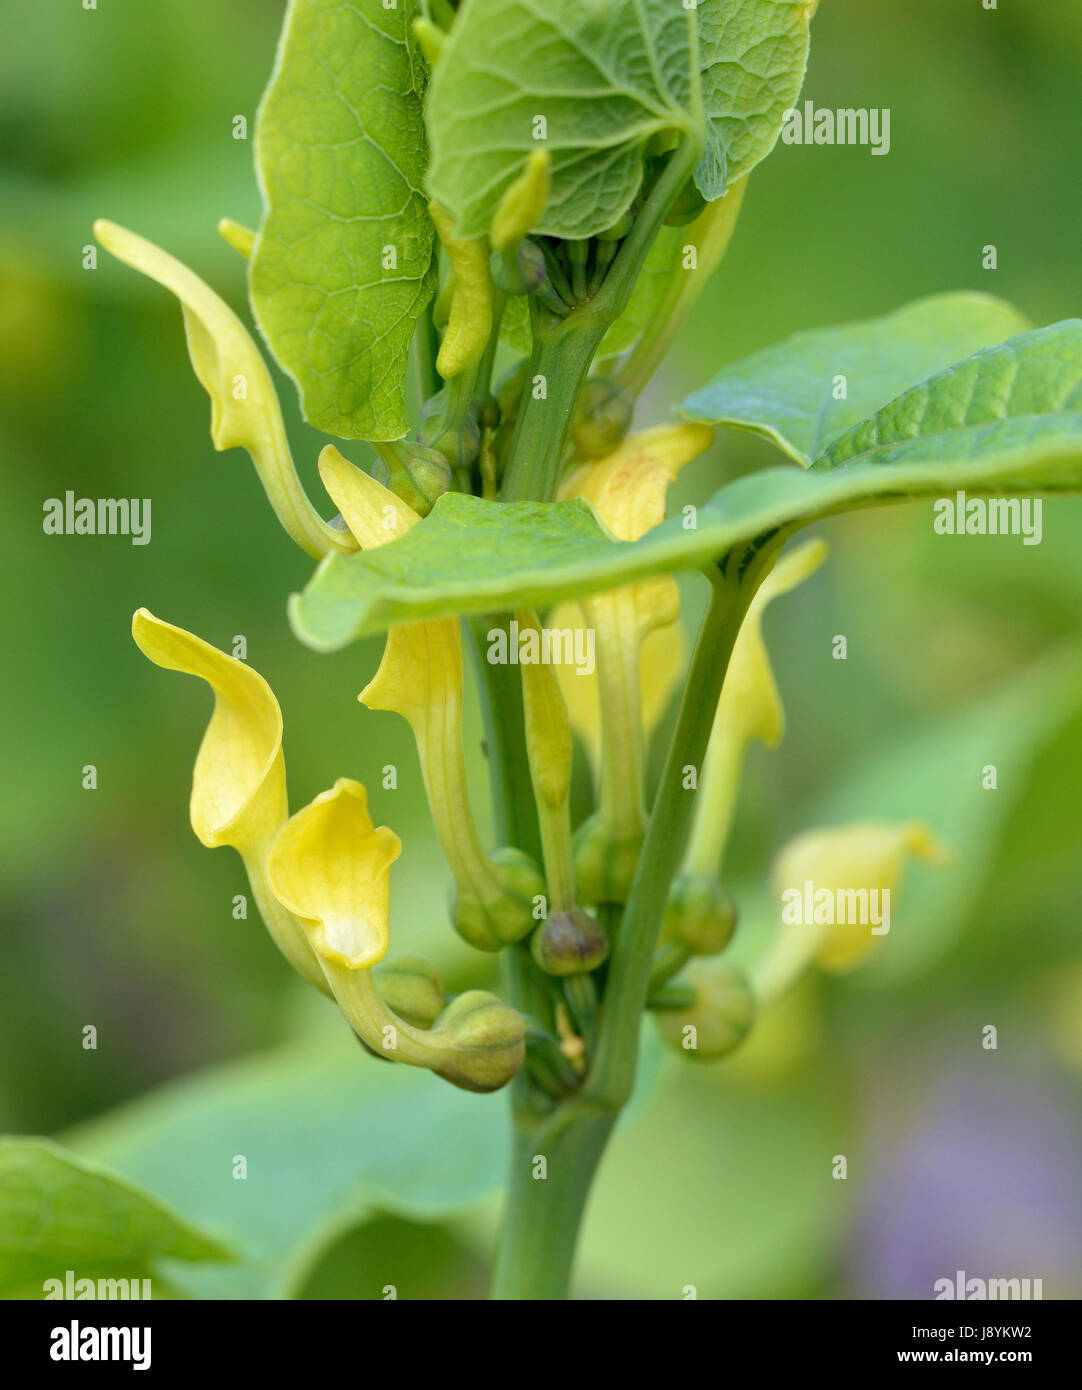 European Birthwort - Aristolochia clematitis Poisonous Climbing Plant Stock Photo